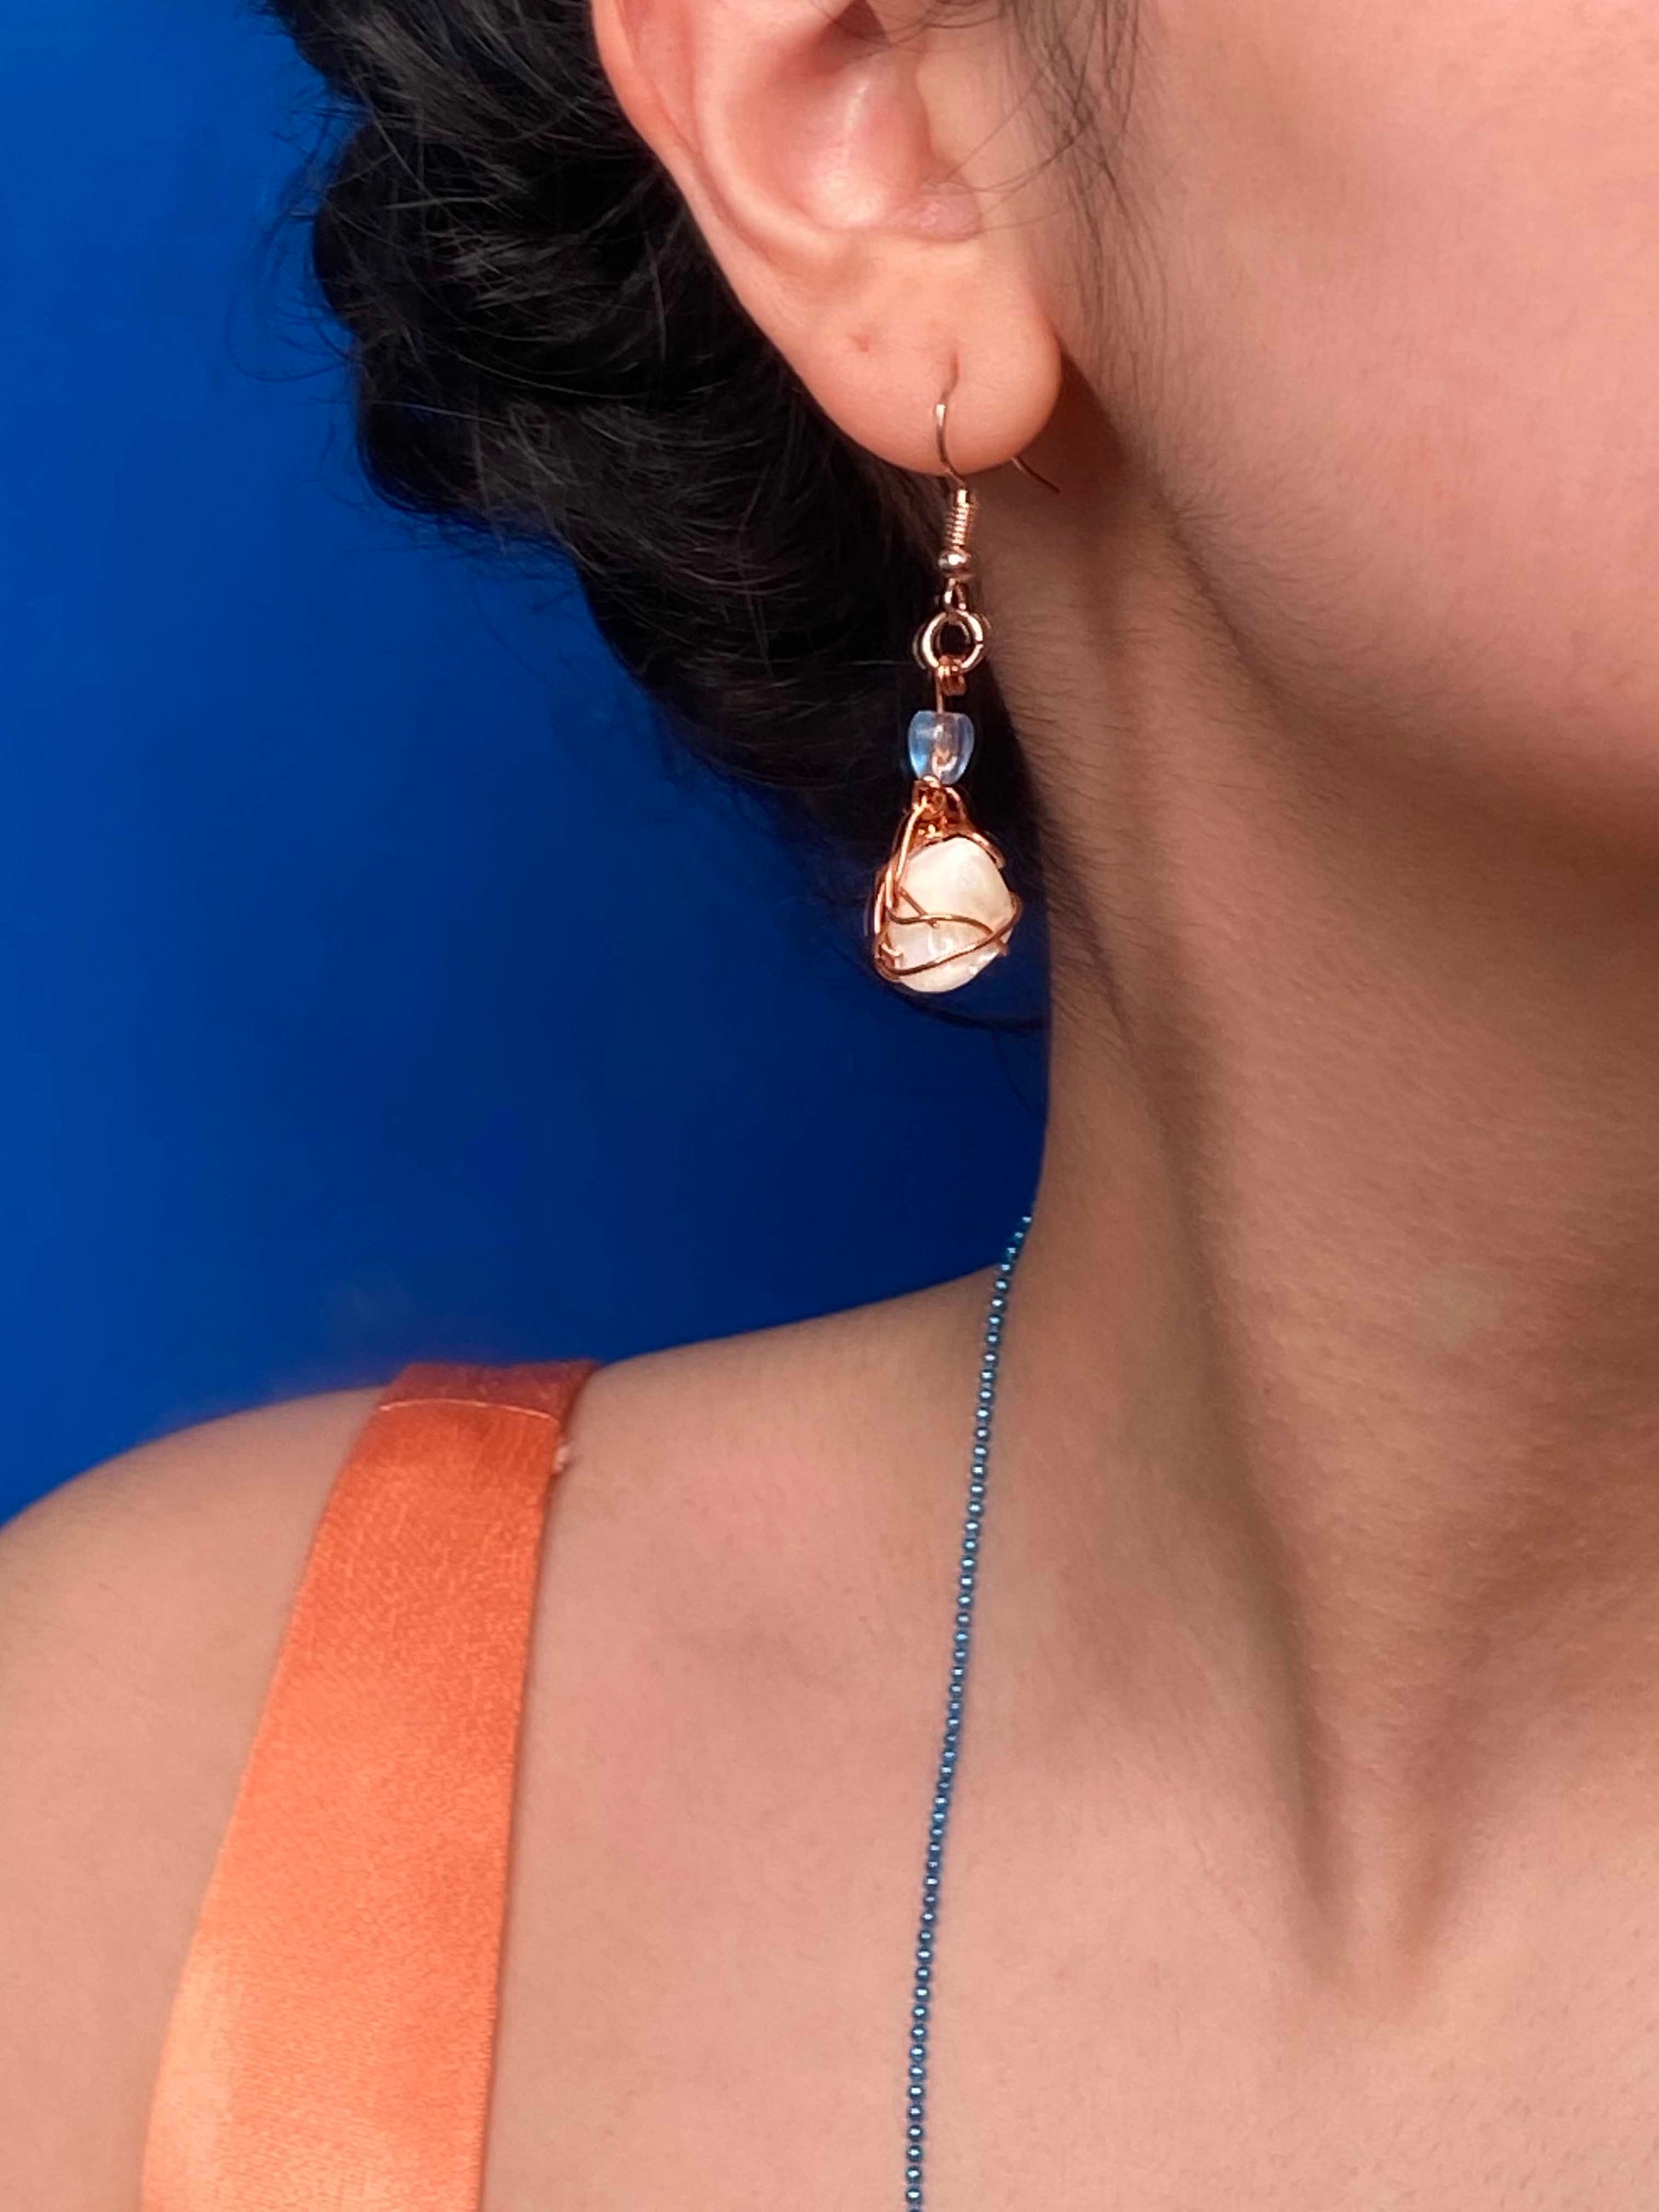 Handmade copper wire wrapped freshwater pearl earrings.